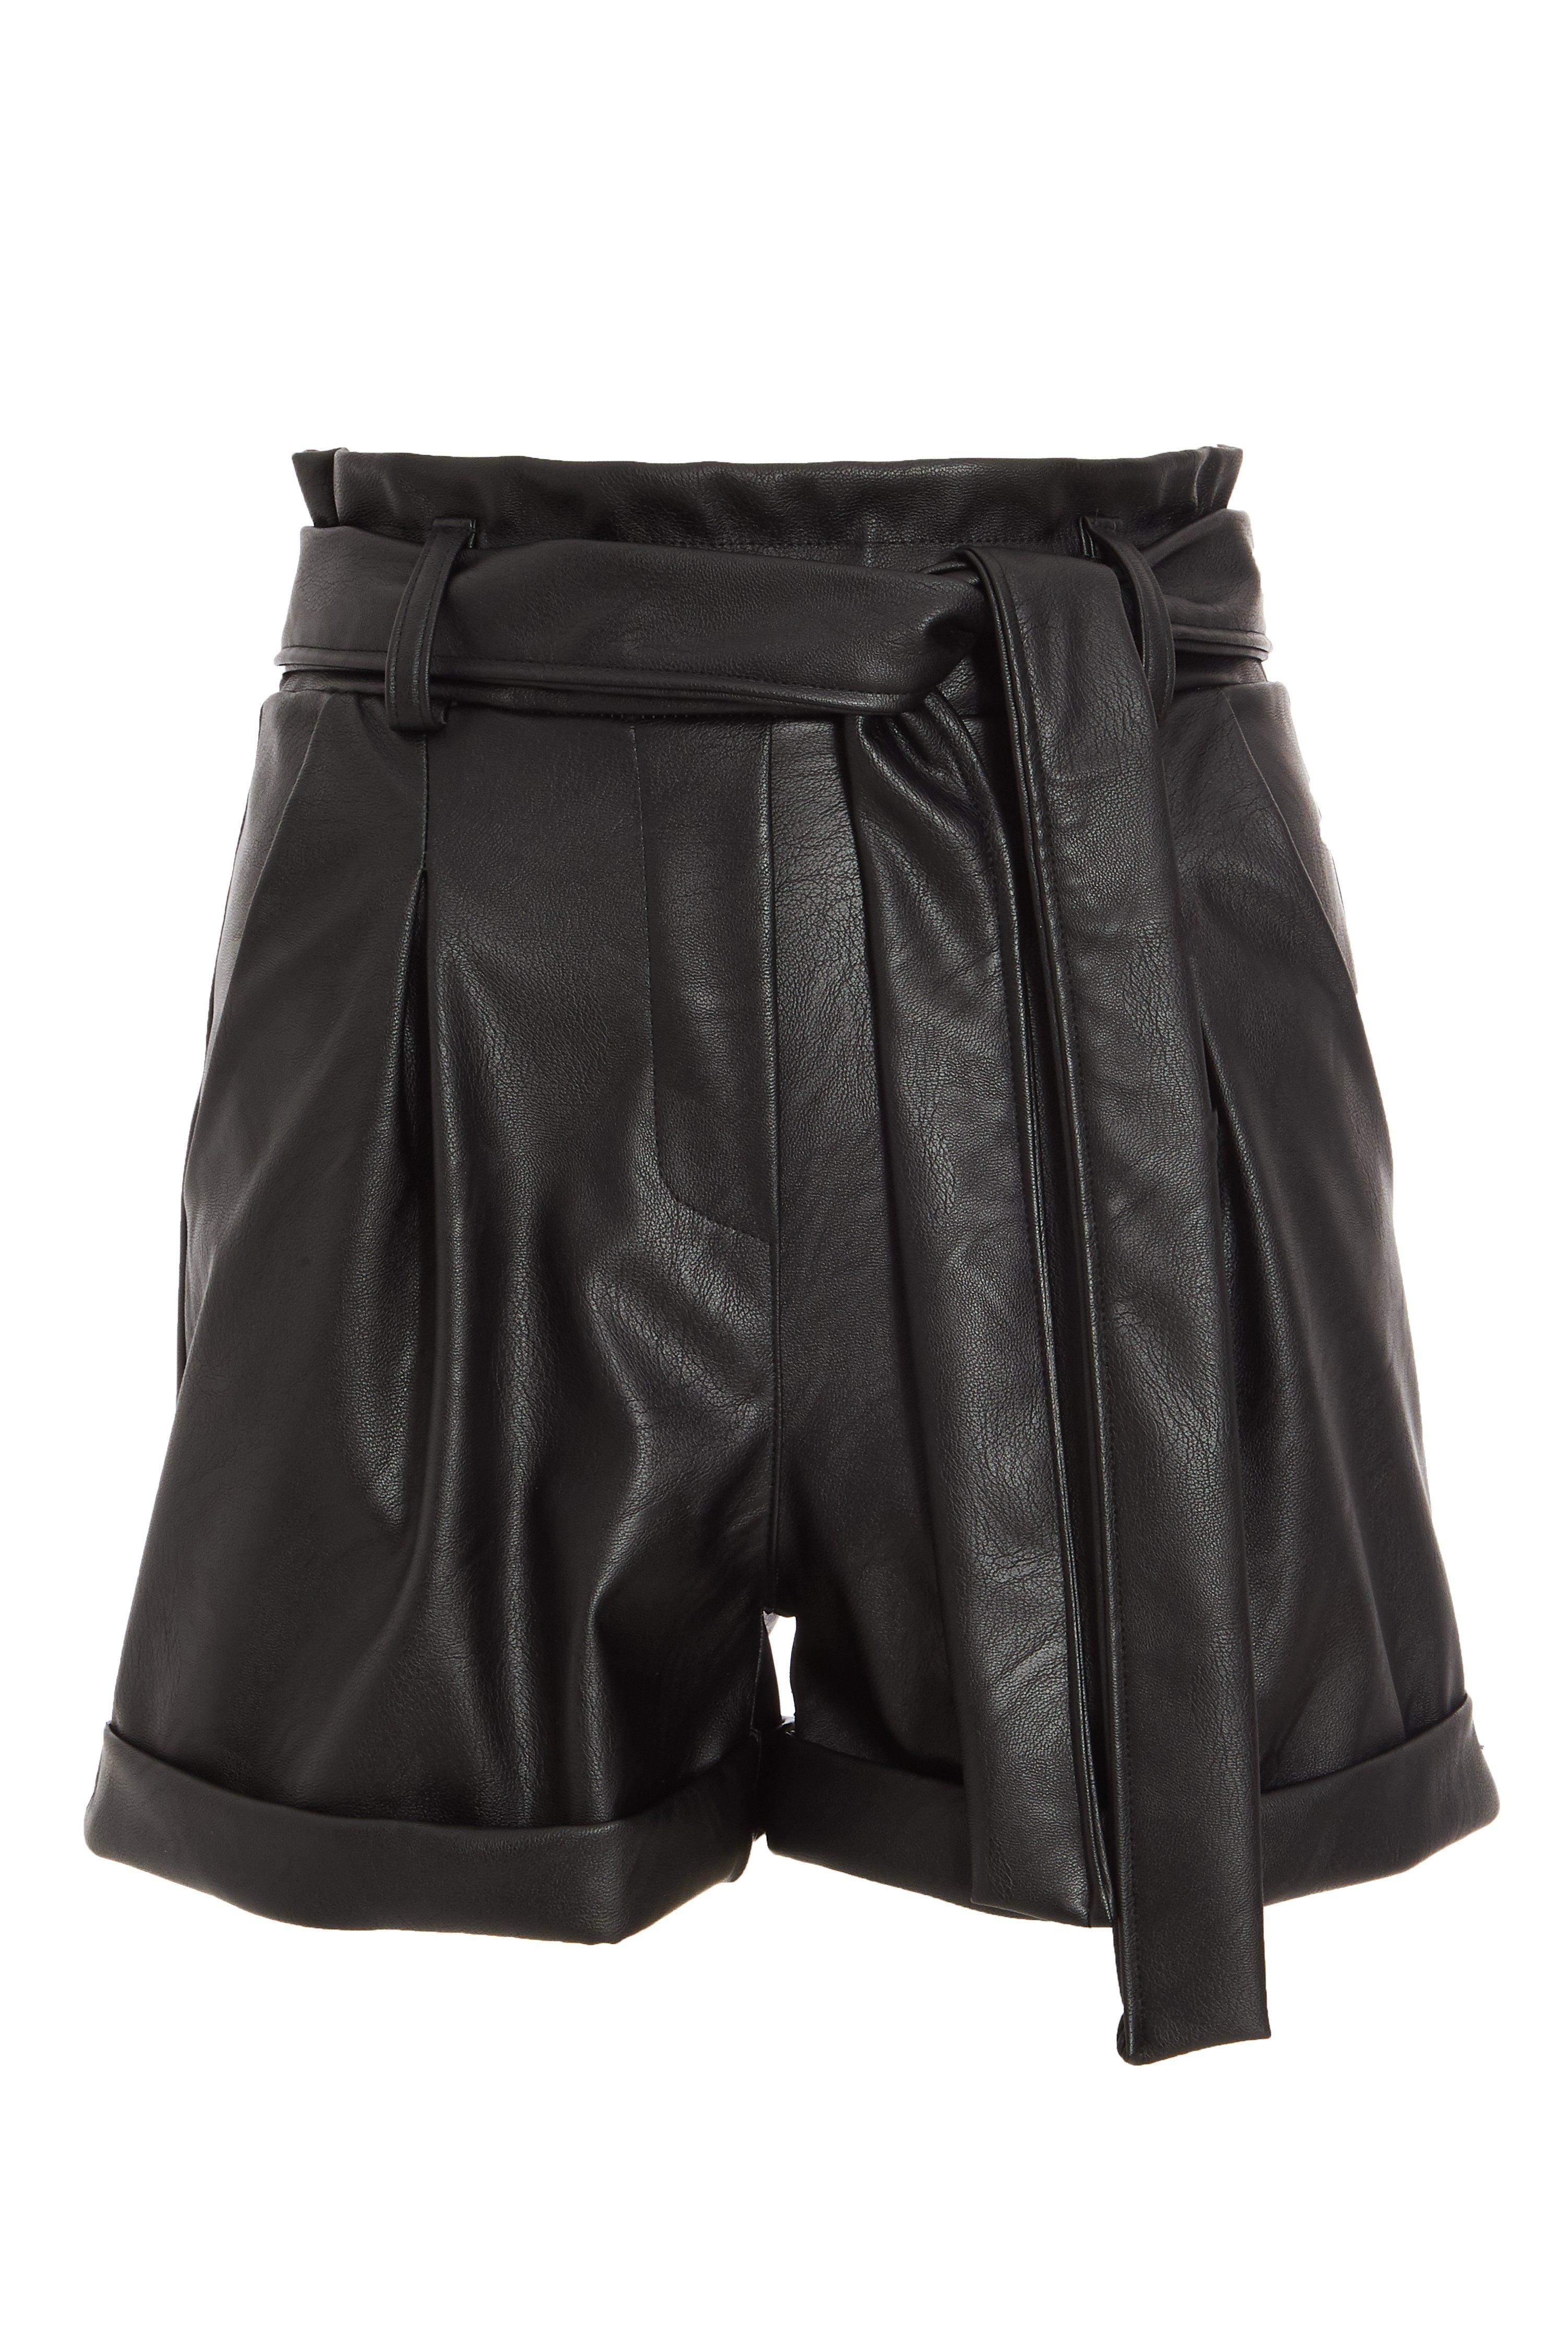 Black Faux Leather Paper Bag Shorts - Quiz Clothing